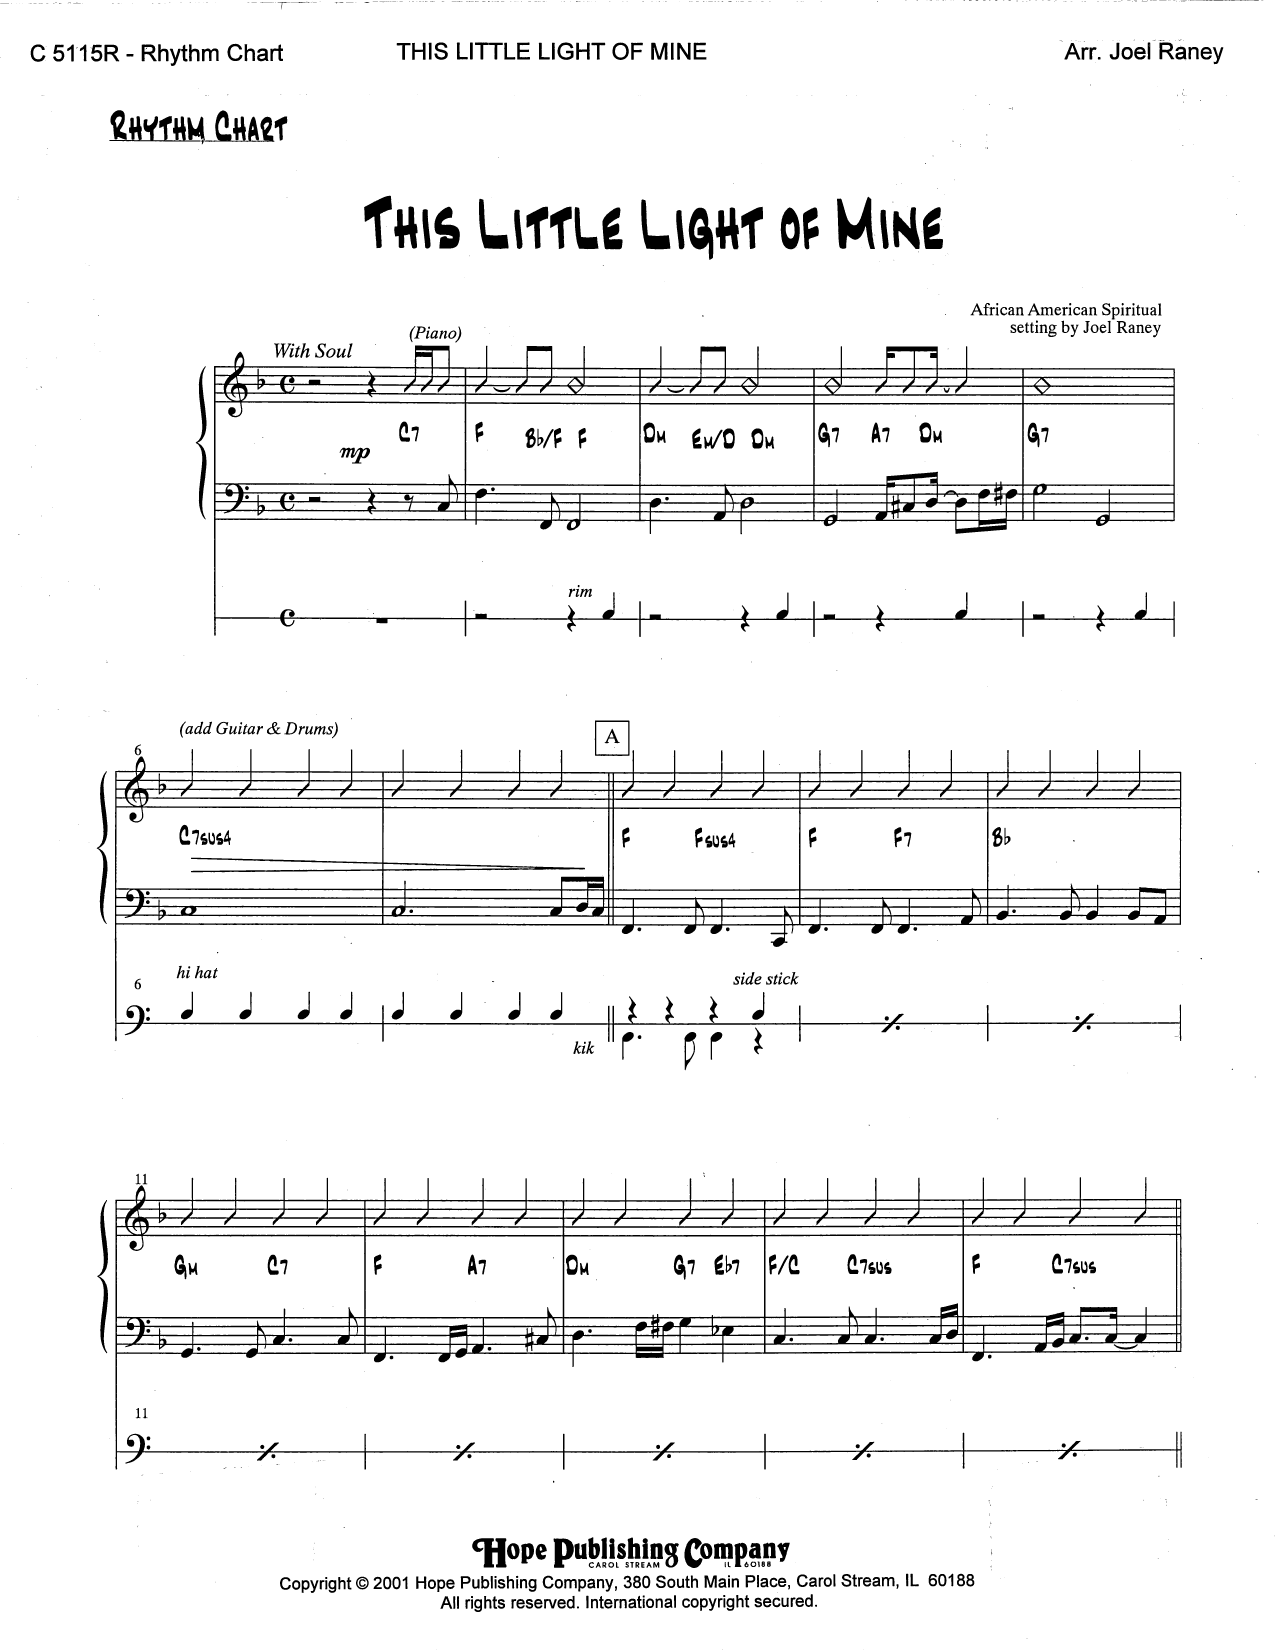 Download Joel Raney This Little Light of Mine - Rhythm Sheet Music